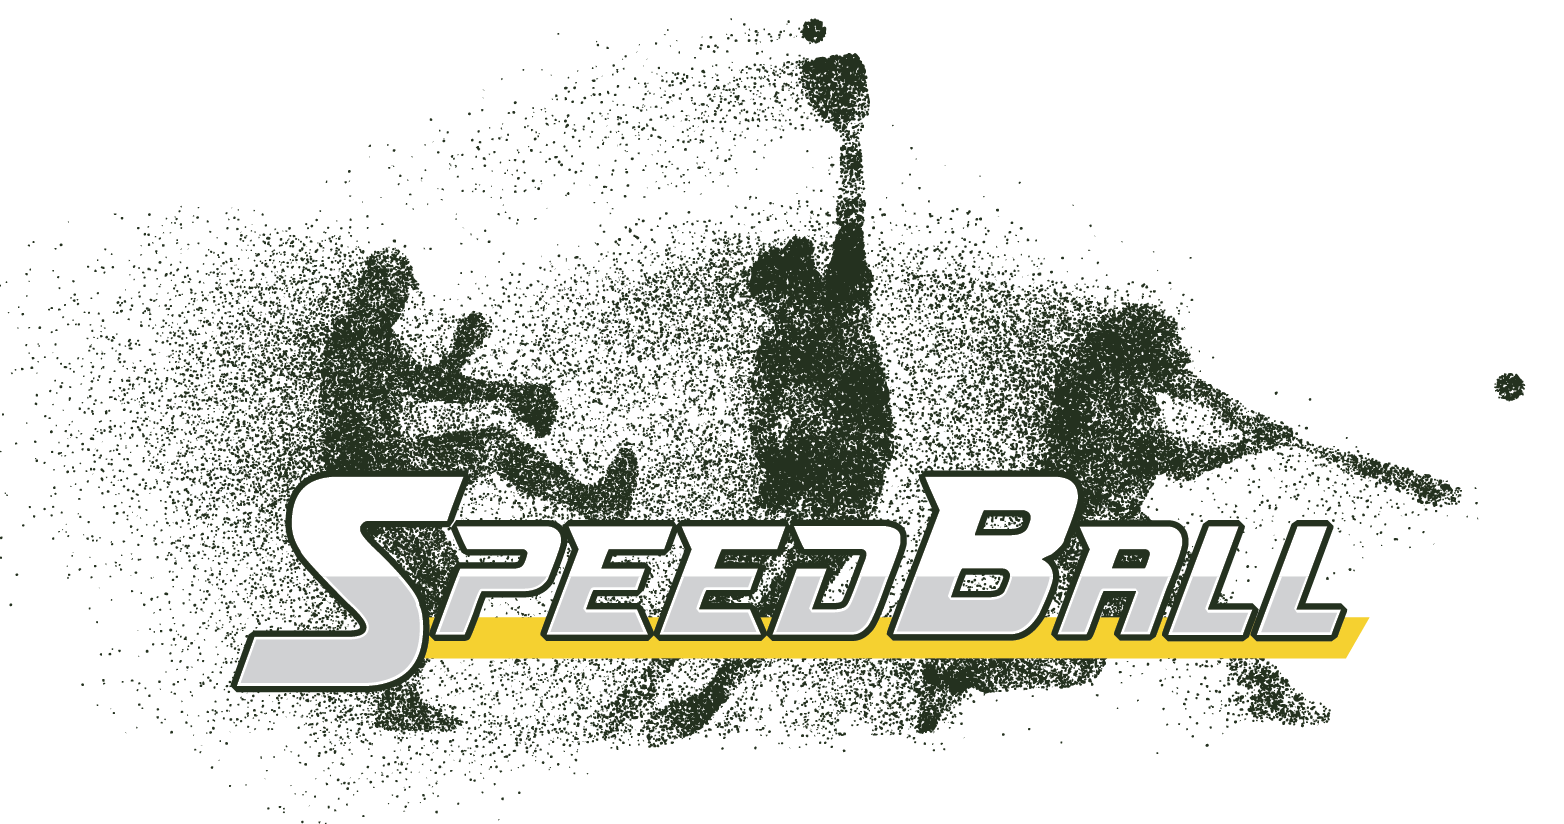 SpeedBall is Back! - Legends Camps